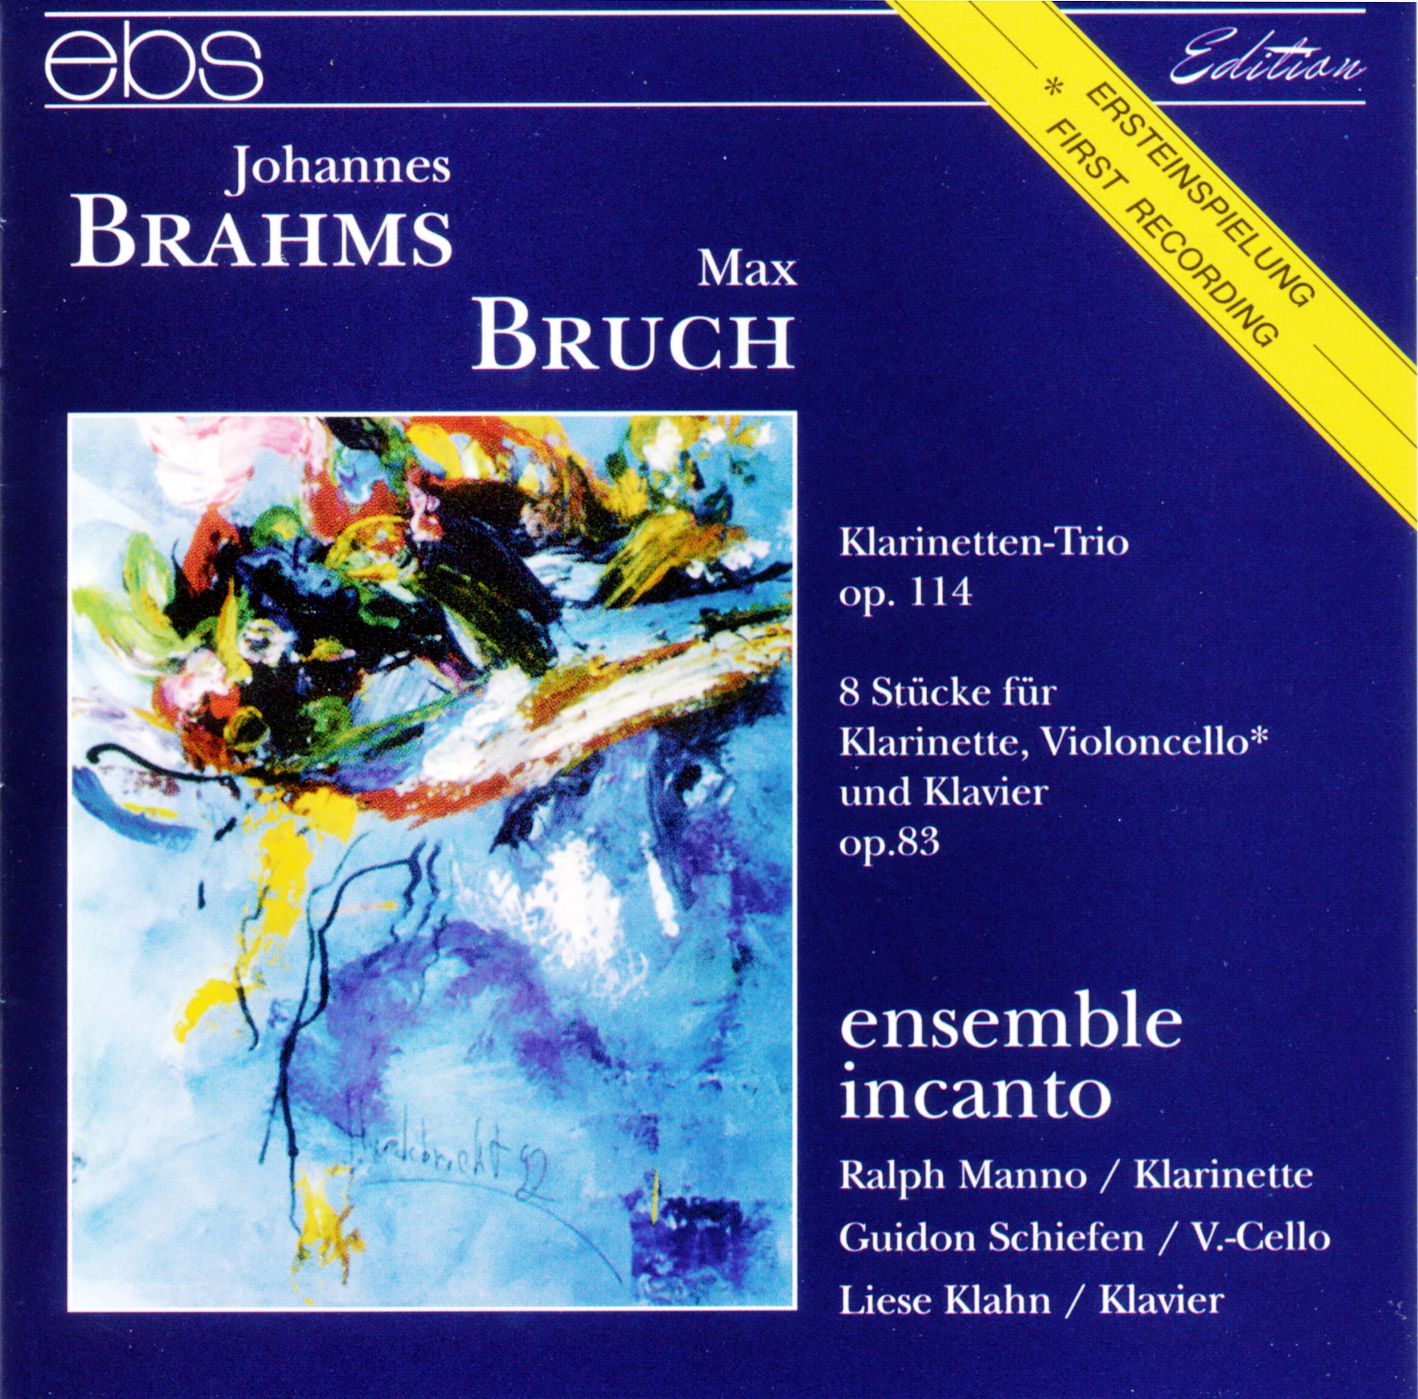 Johannes Brahms / Max Bruch - Ensemble incanto